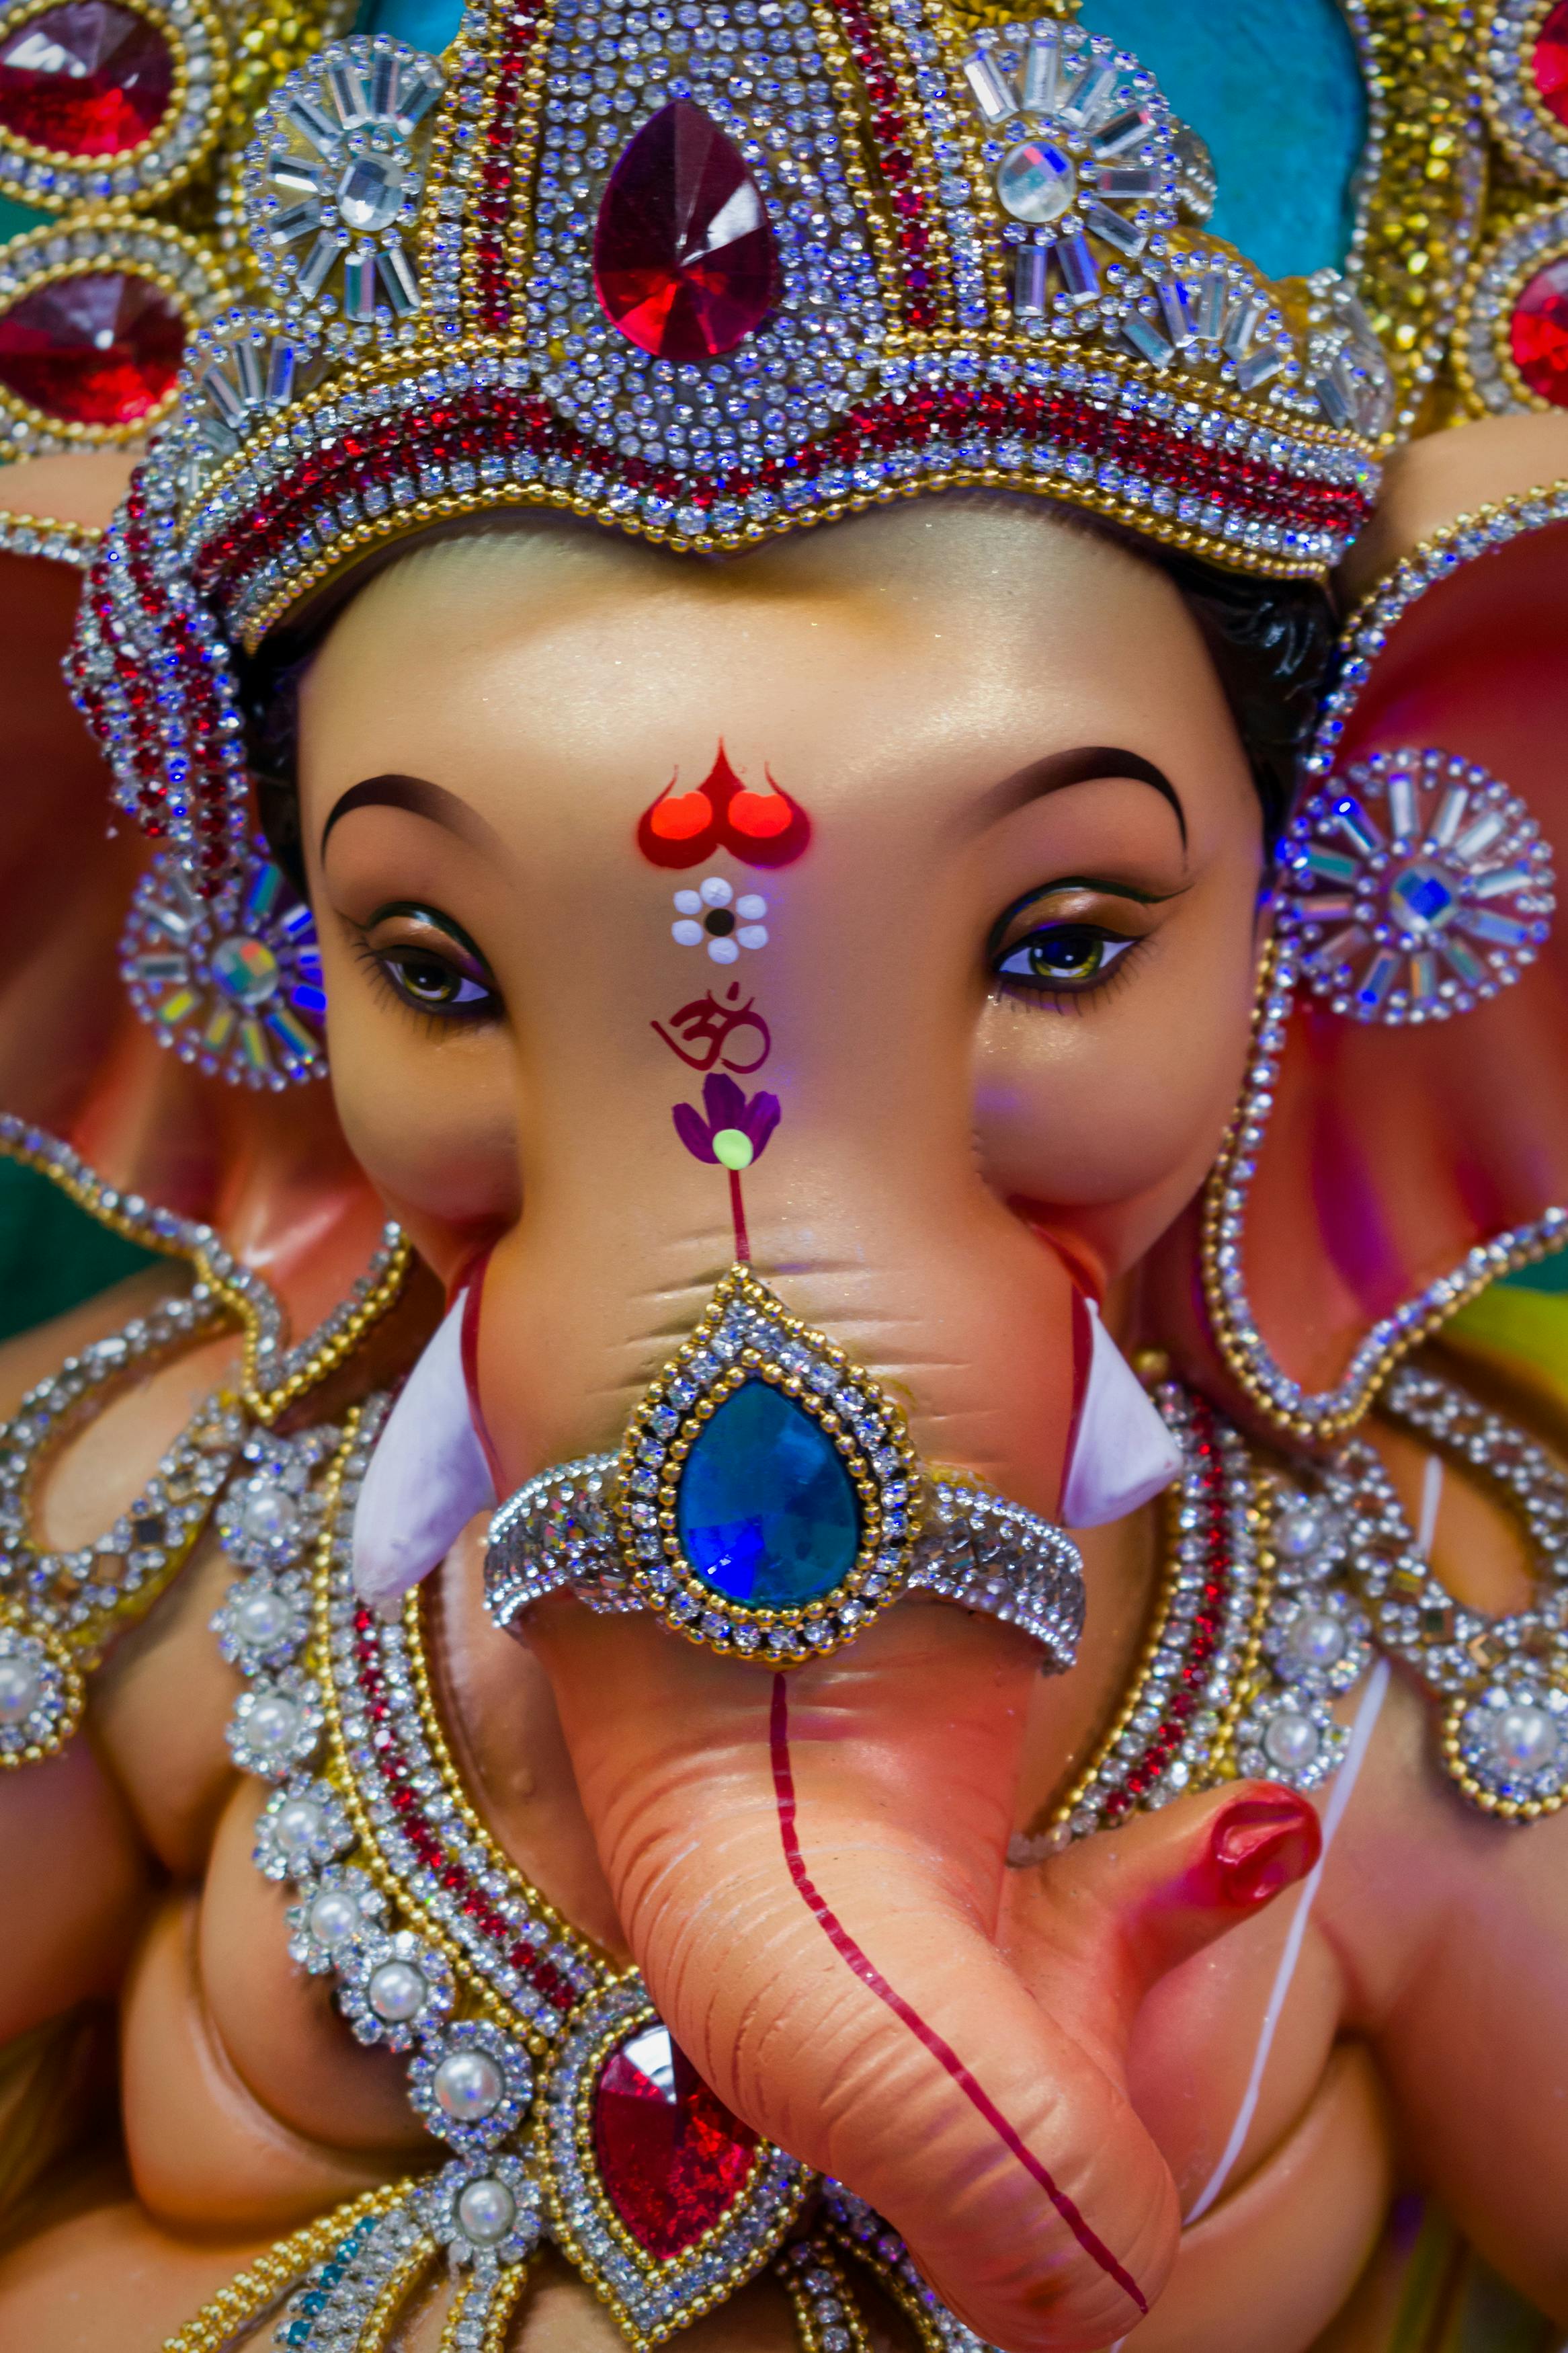 Lord Ganesha Images HD 1080p Download Free